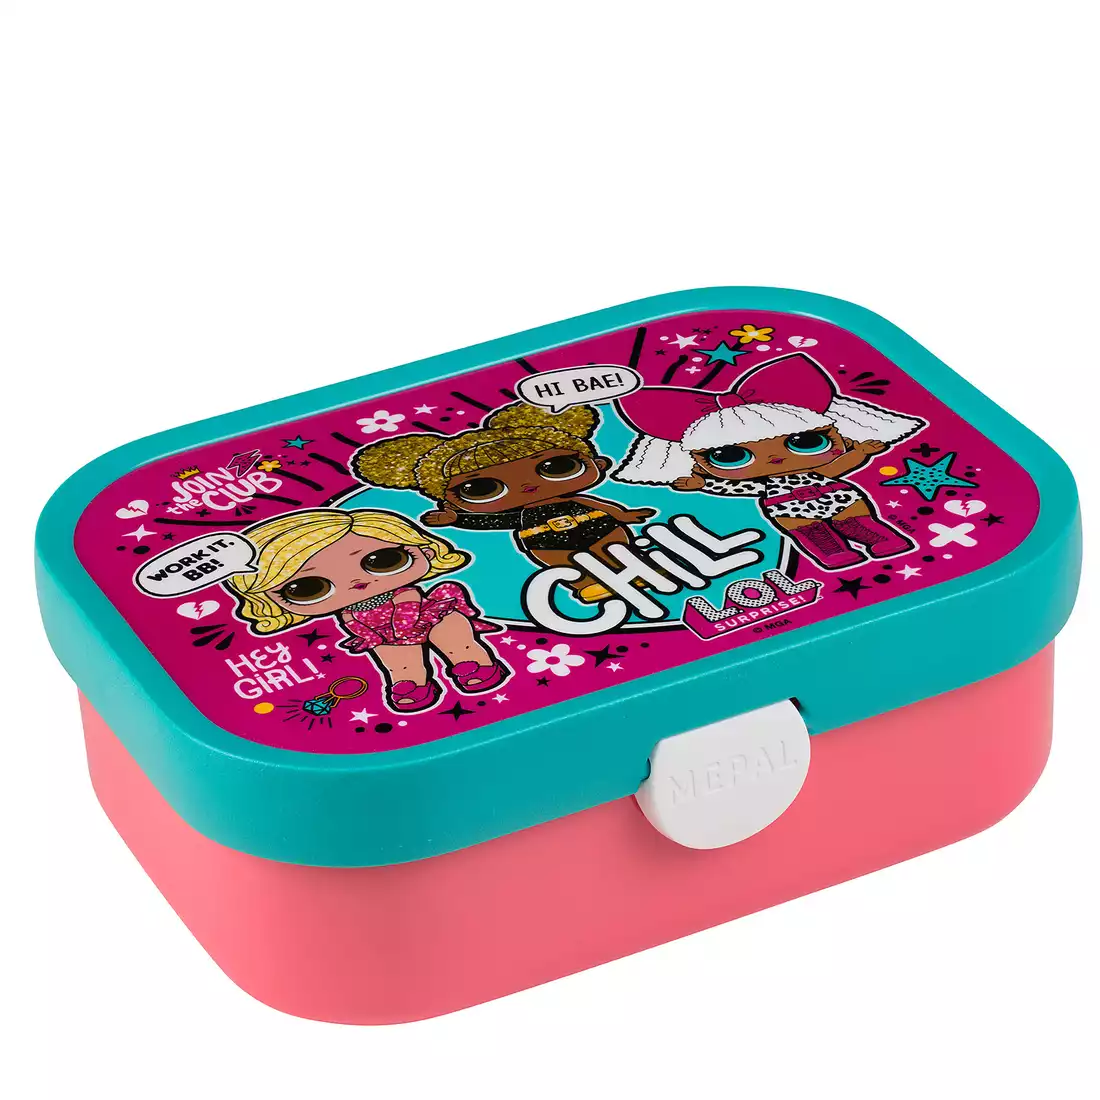 https://www.mikesport.eu/img/imagecache/32001-33000/product-media/Mepal-Campus-LOL-Surprise-children-s-lunchbox-pink-turquoise-112662-1100x1100.webp